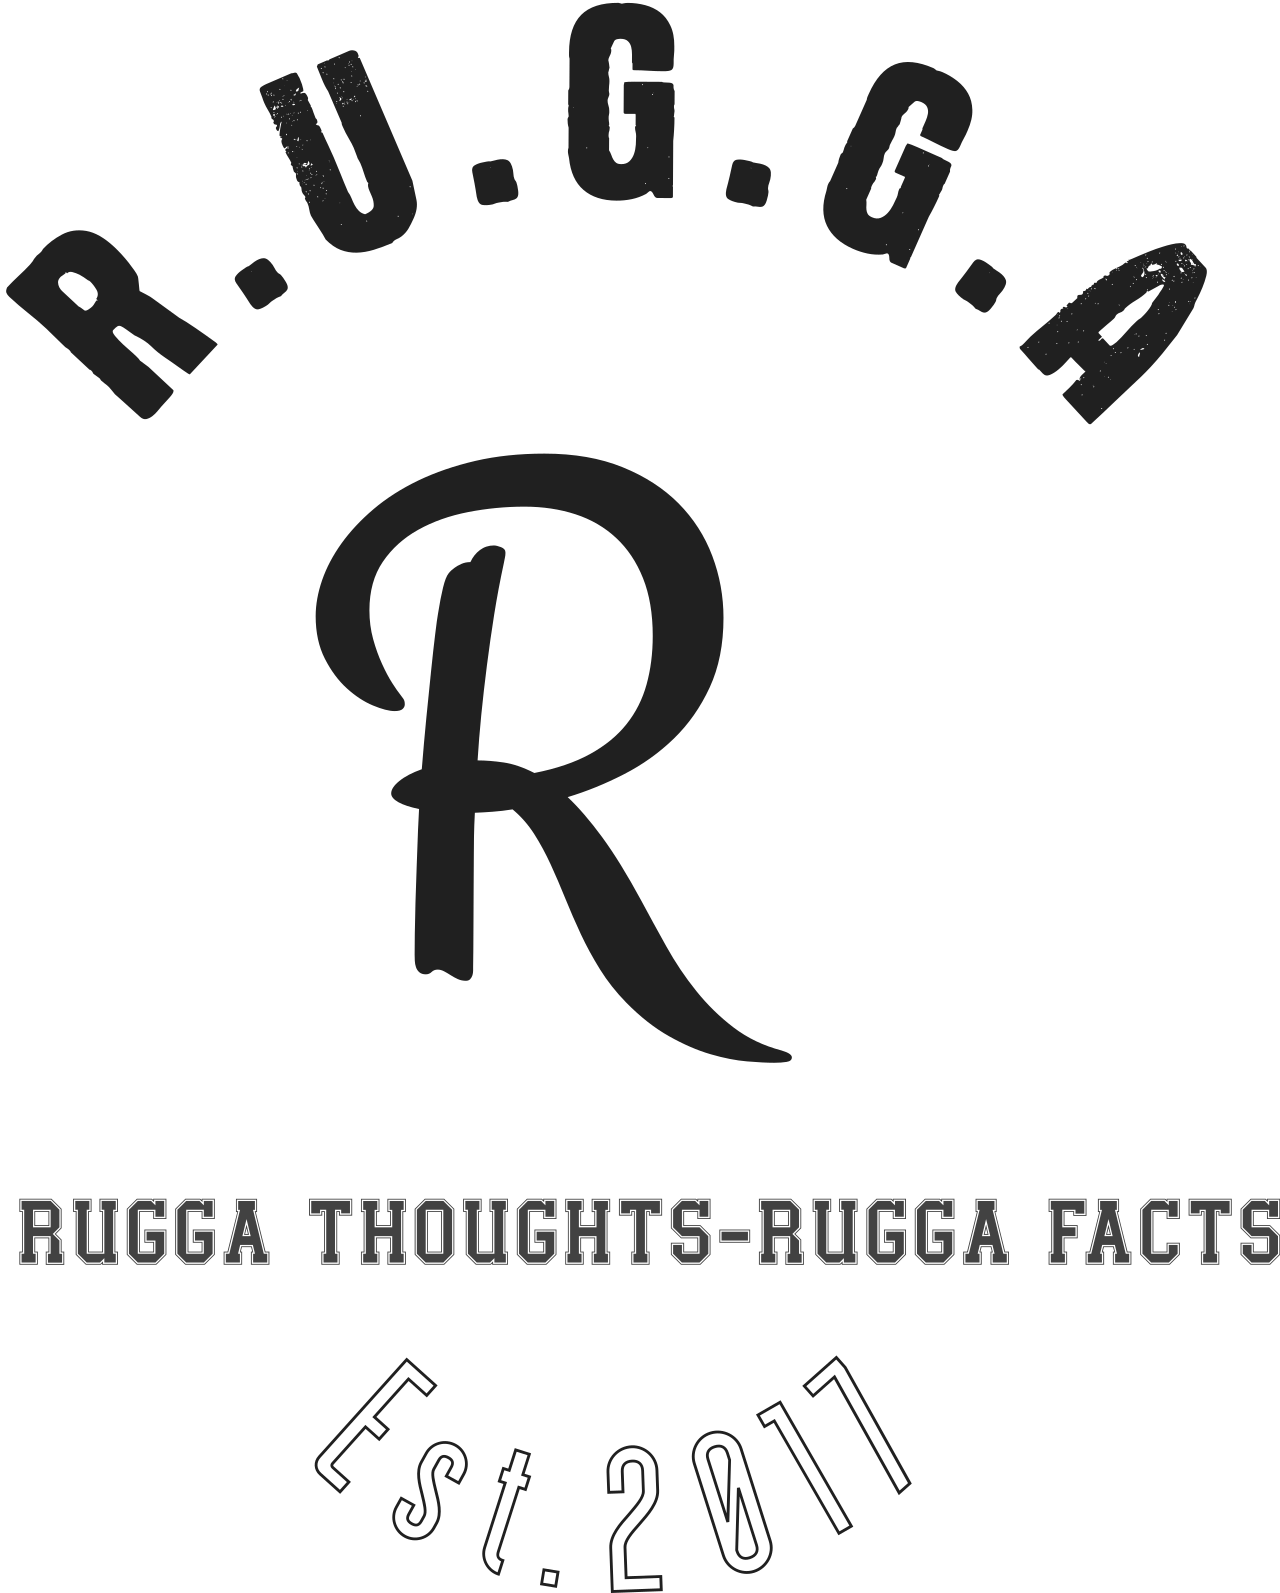 R.U.G.G.A's logo